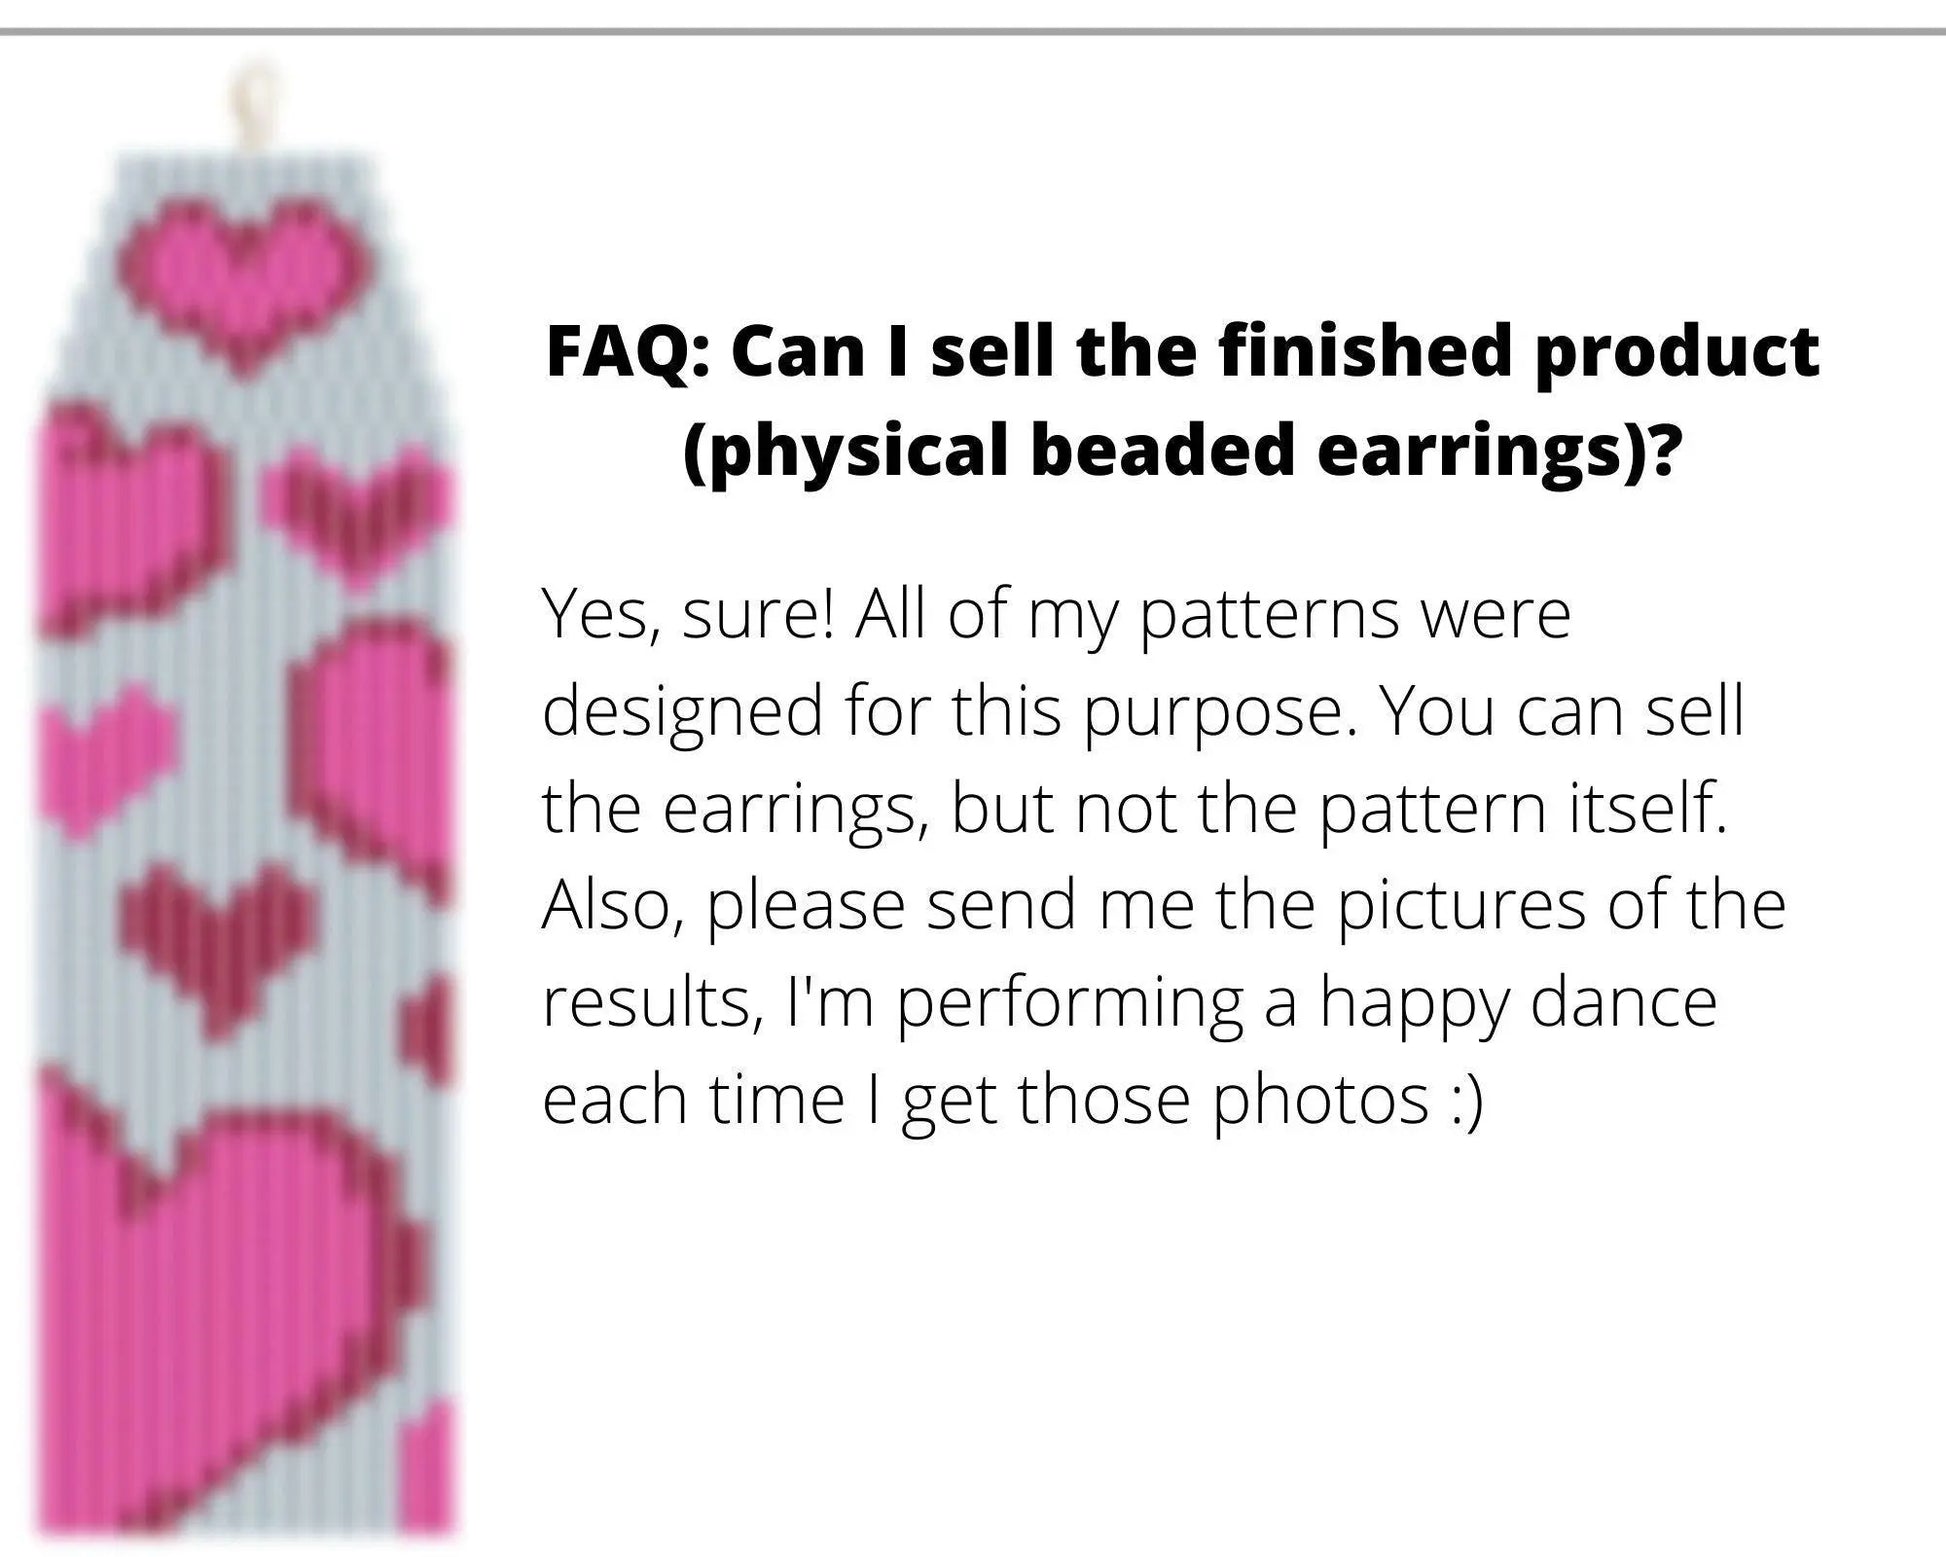 Hearts Brick Stitch pattern for fringe beaded earrings - NikoBeadsUA